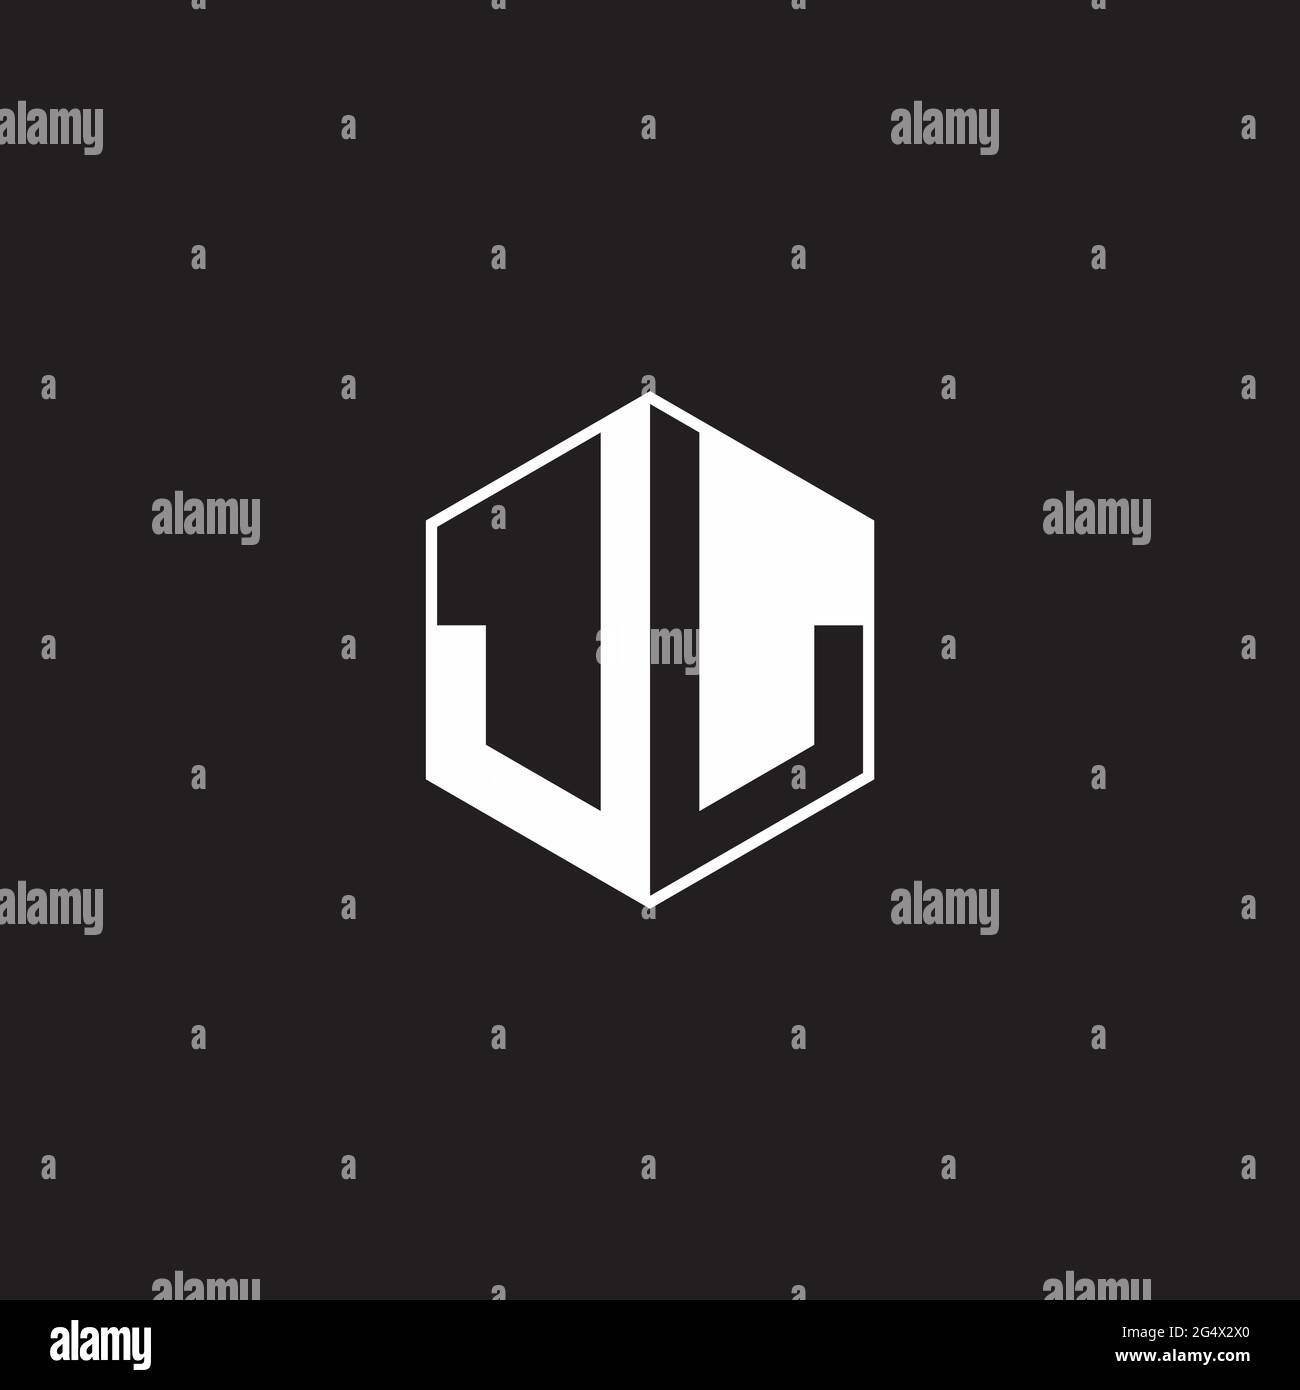 JL J L LJ Logo monogram hexagon with black background negative space style Stock Vector